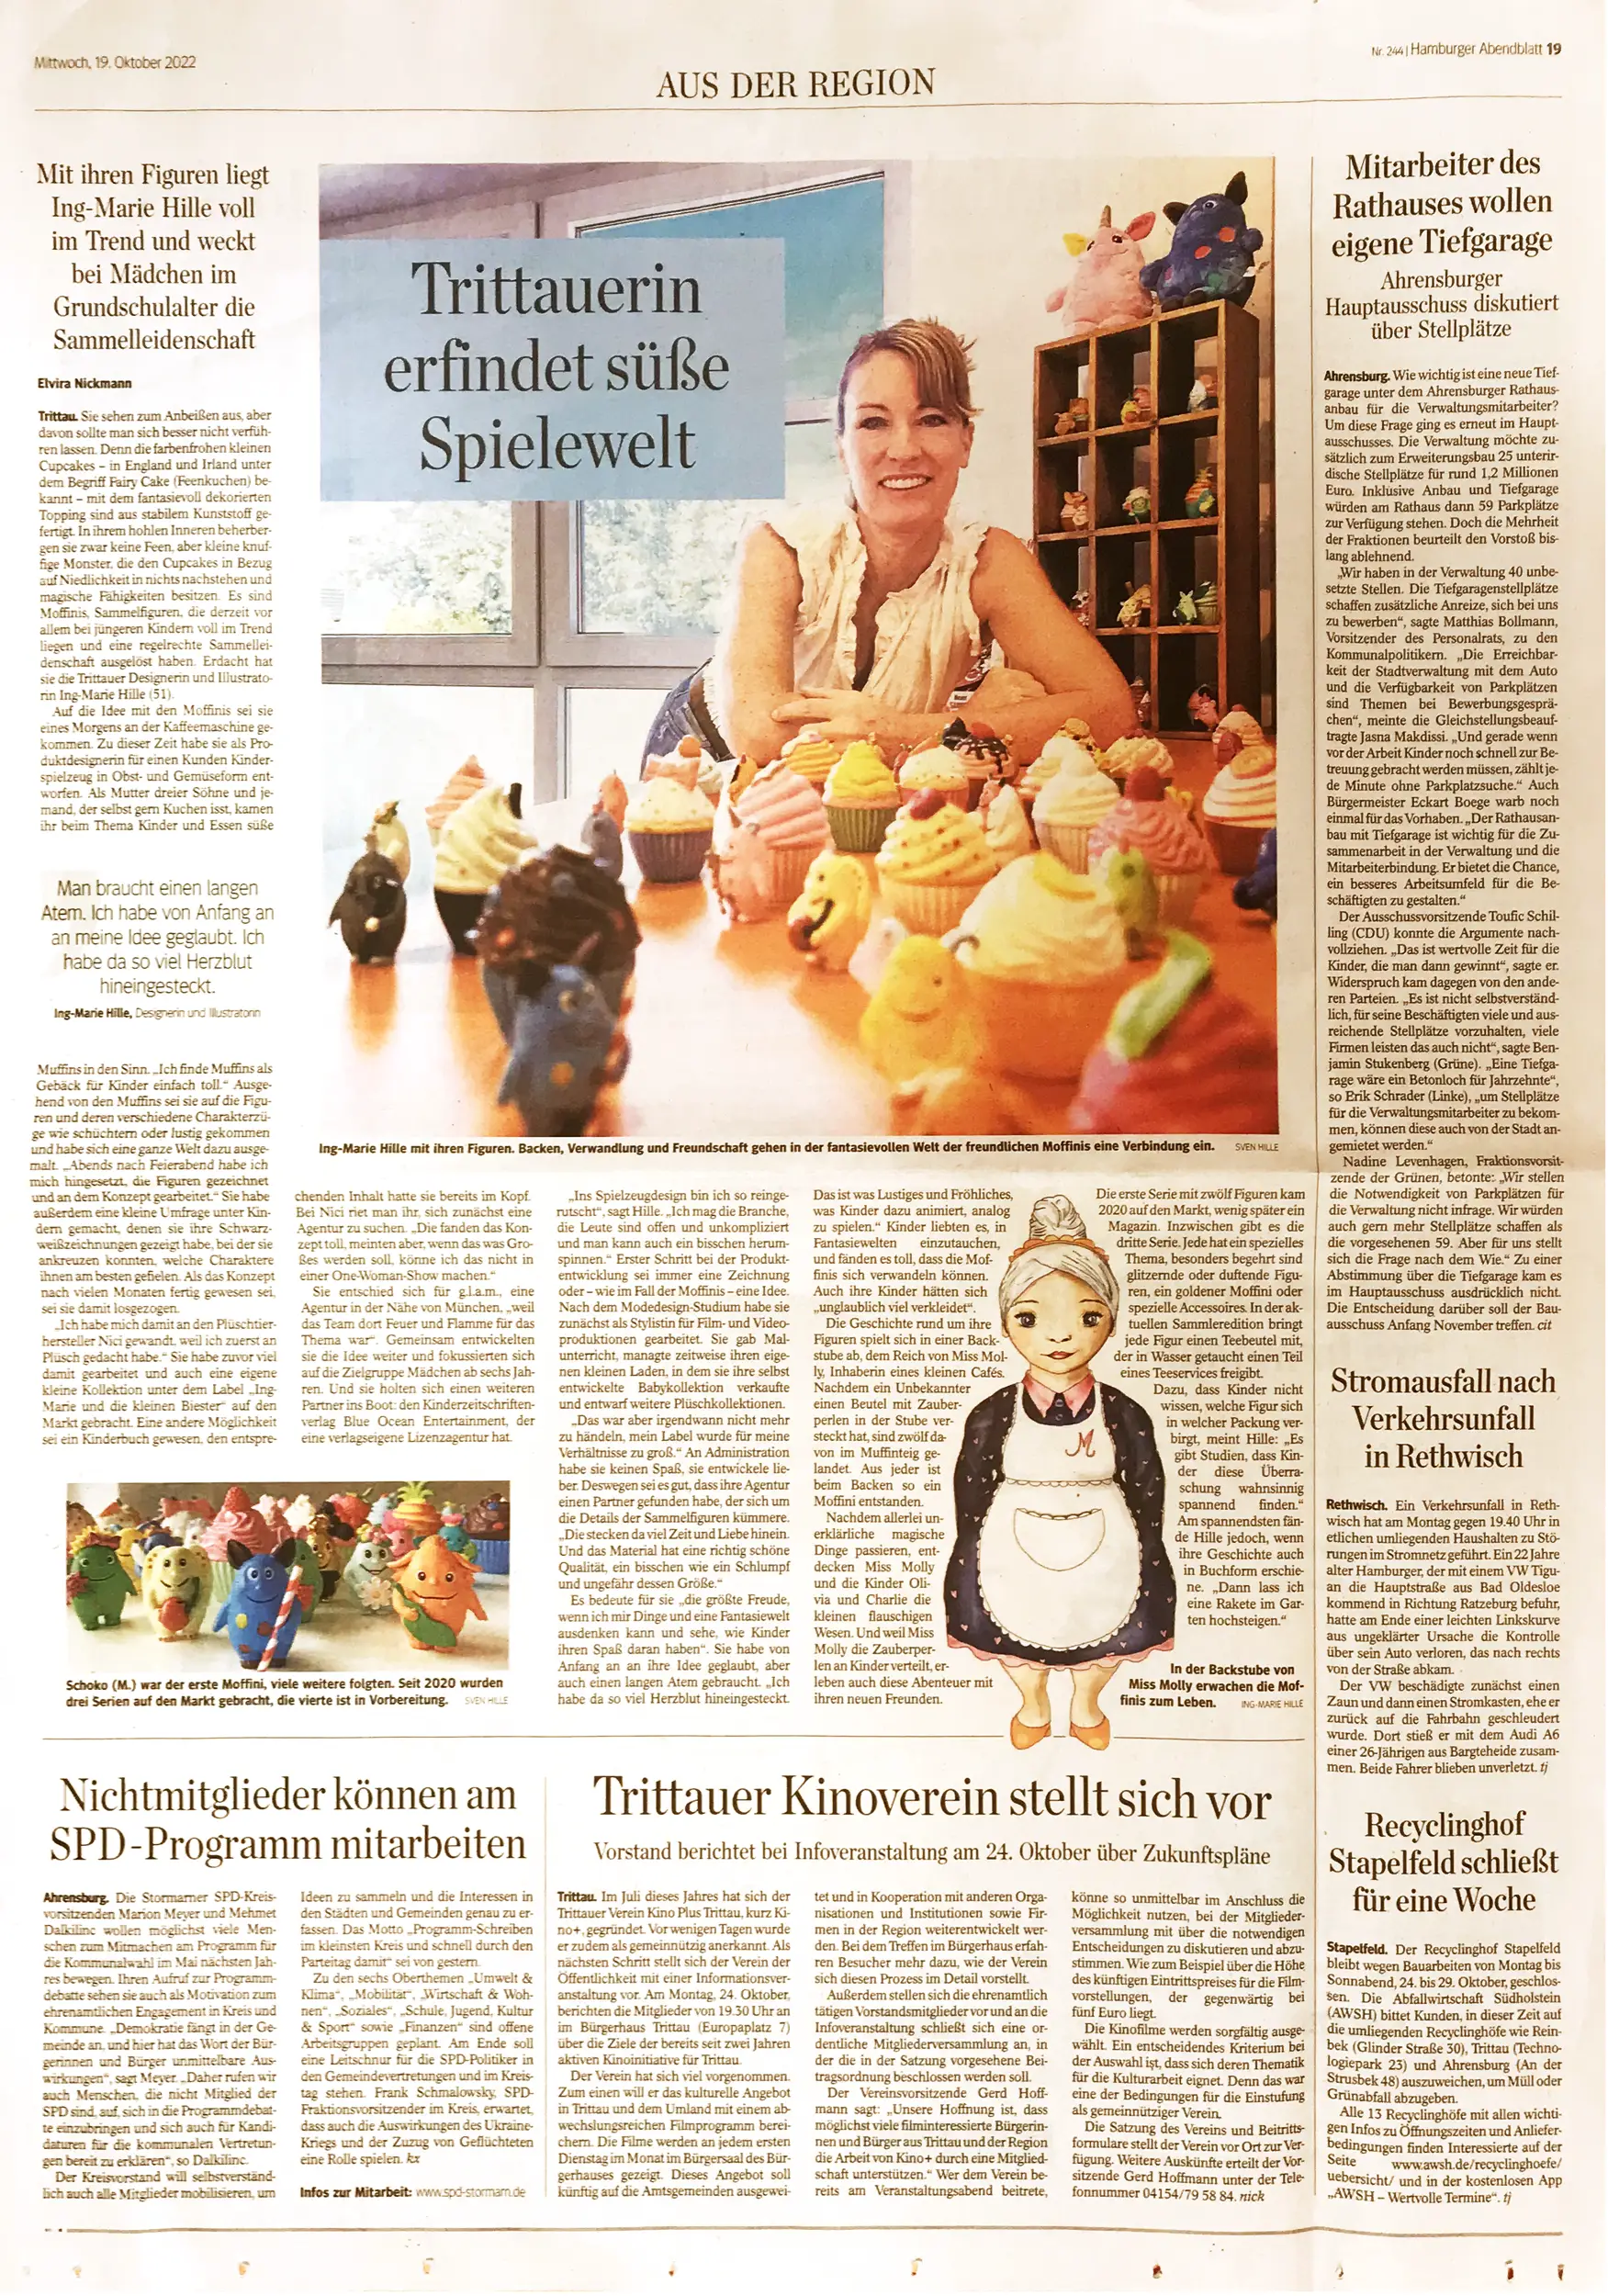 Artikel aus Hamburger Abendblatt 19.10.2022